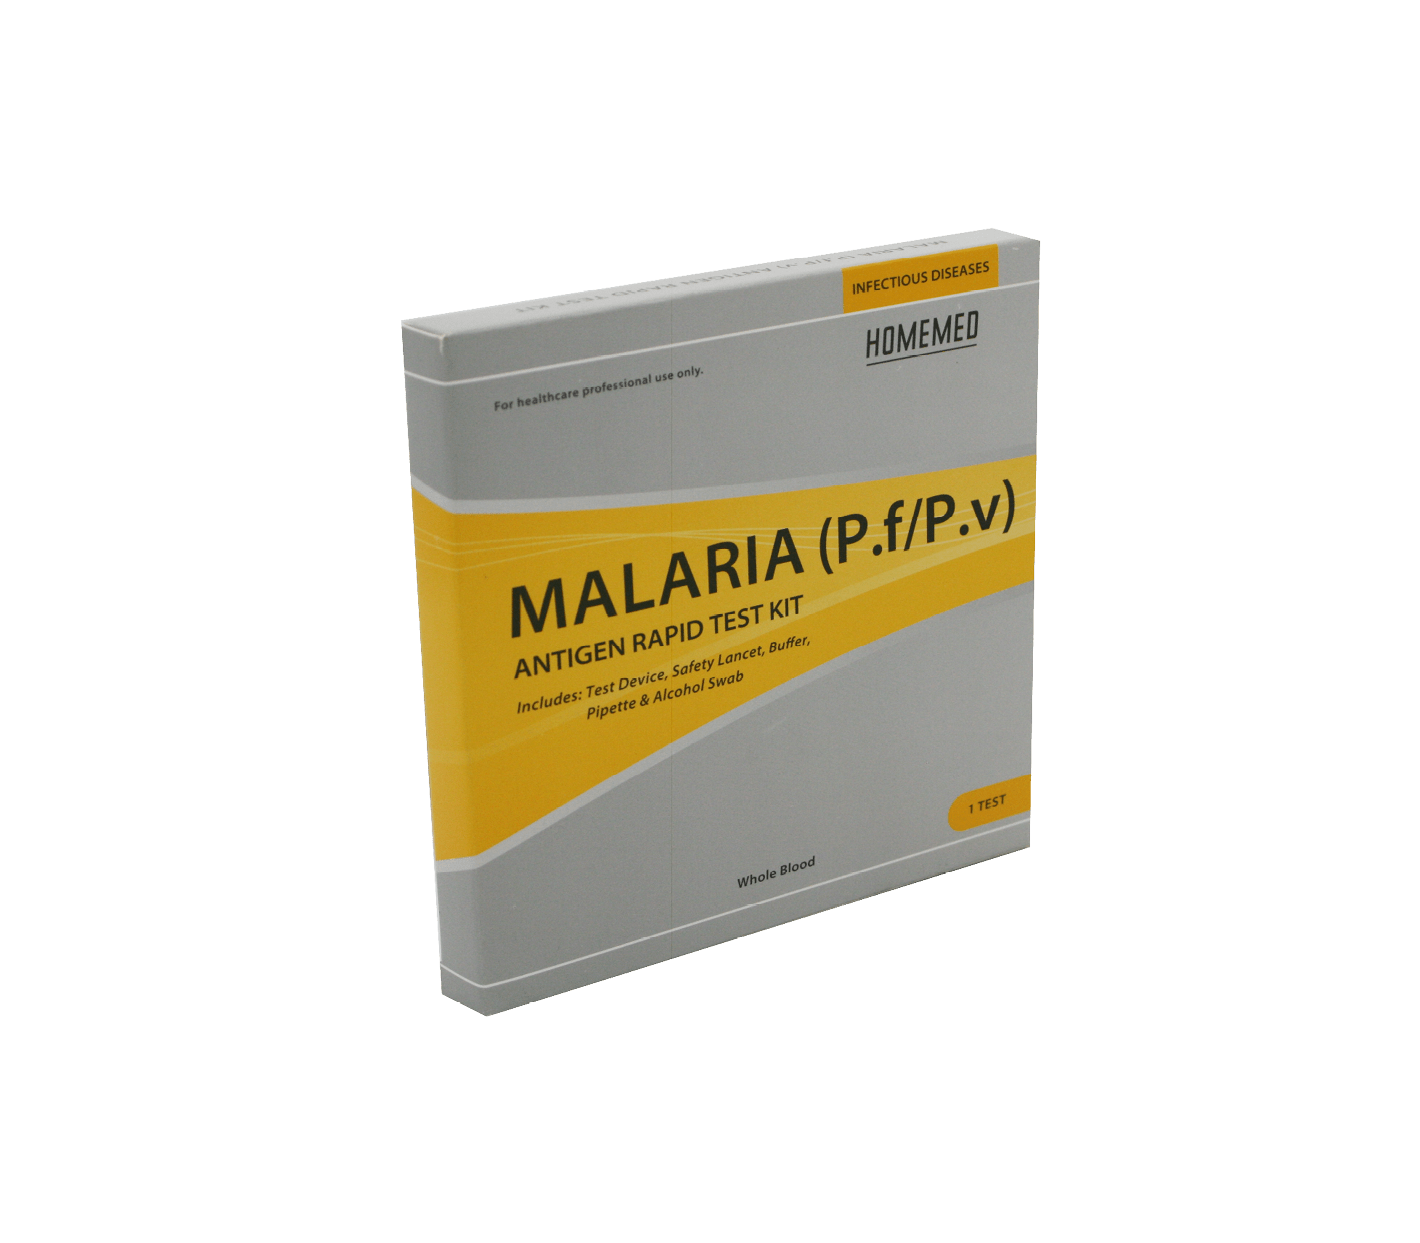 Mopani Pharmacy First Aid Homemed Malaria Antigen Rapid Test Kit 6009818300221 126190